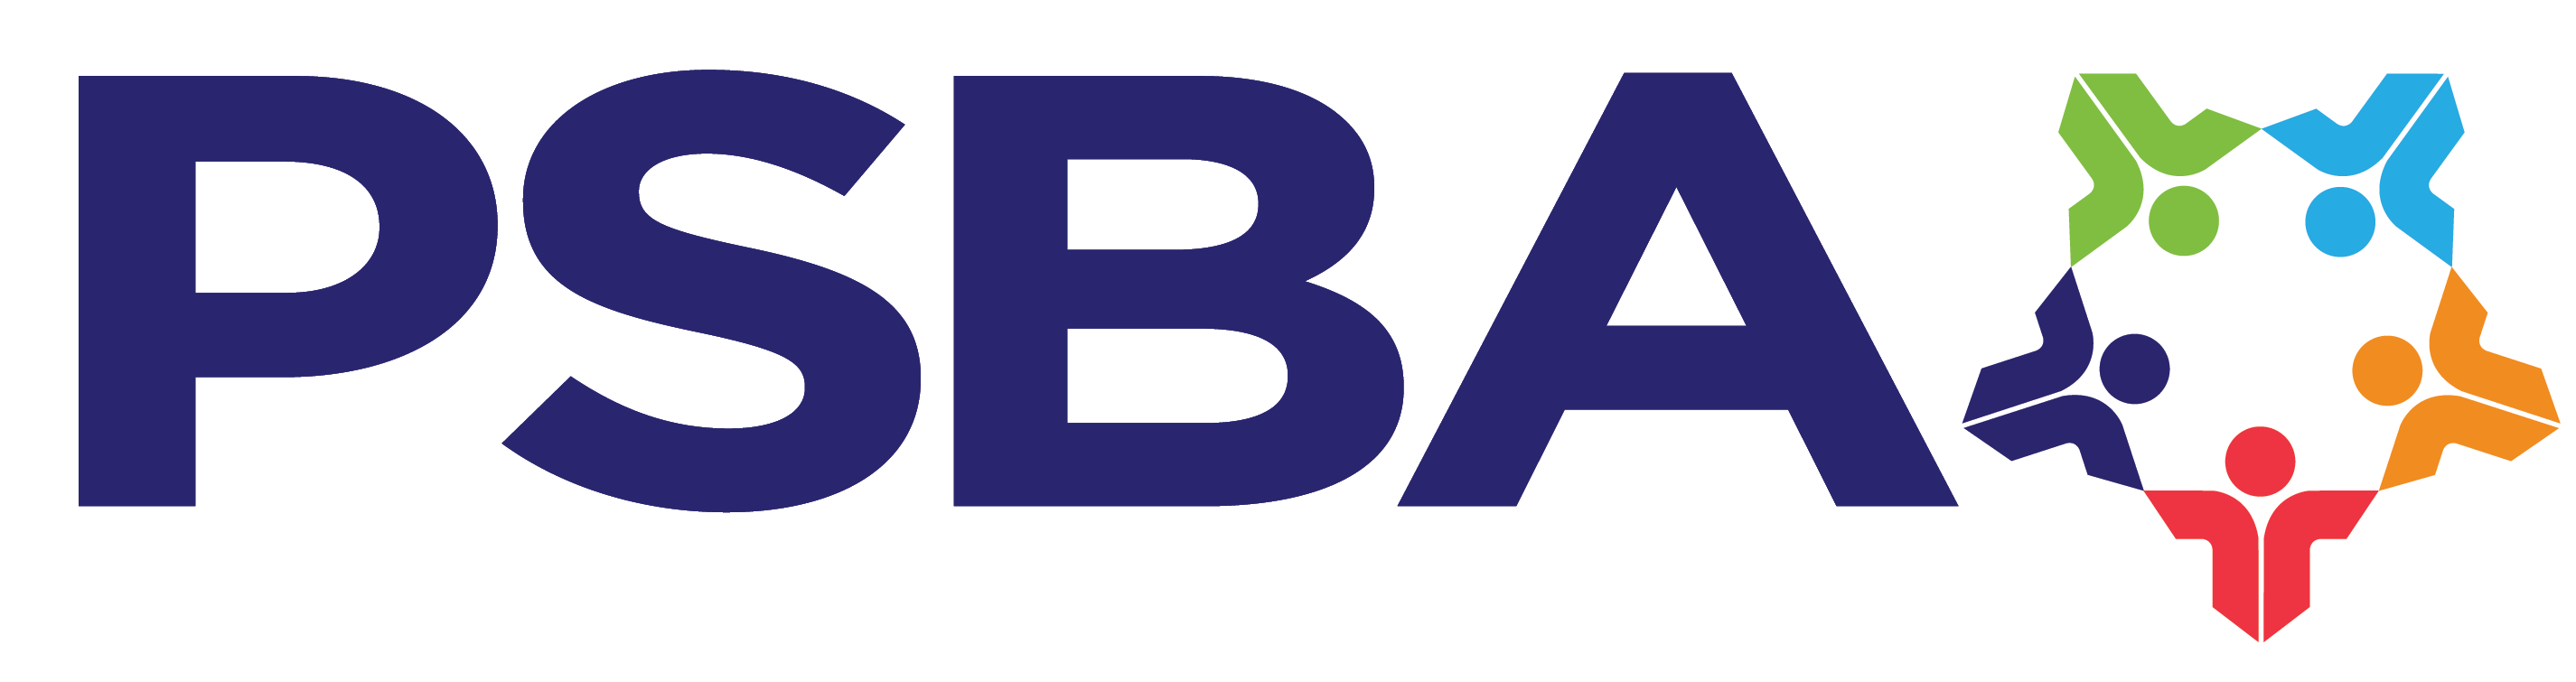 PSBA color logo outlined in white